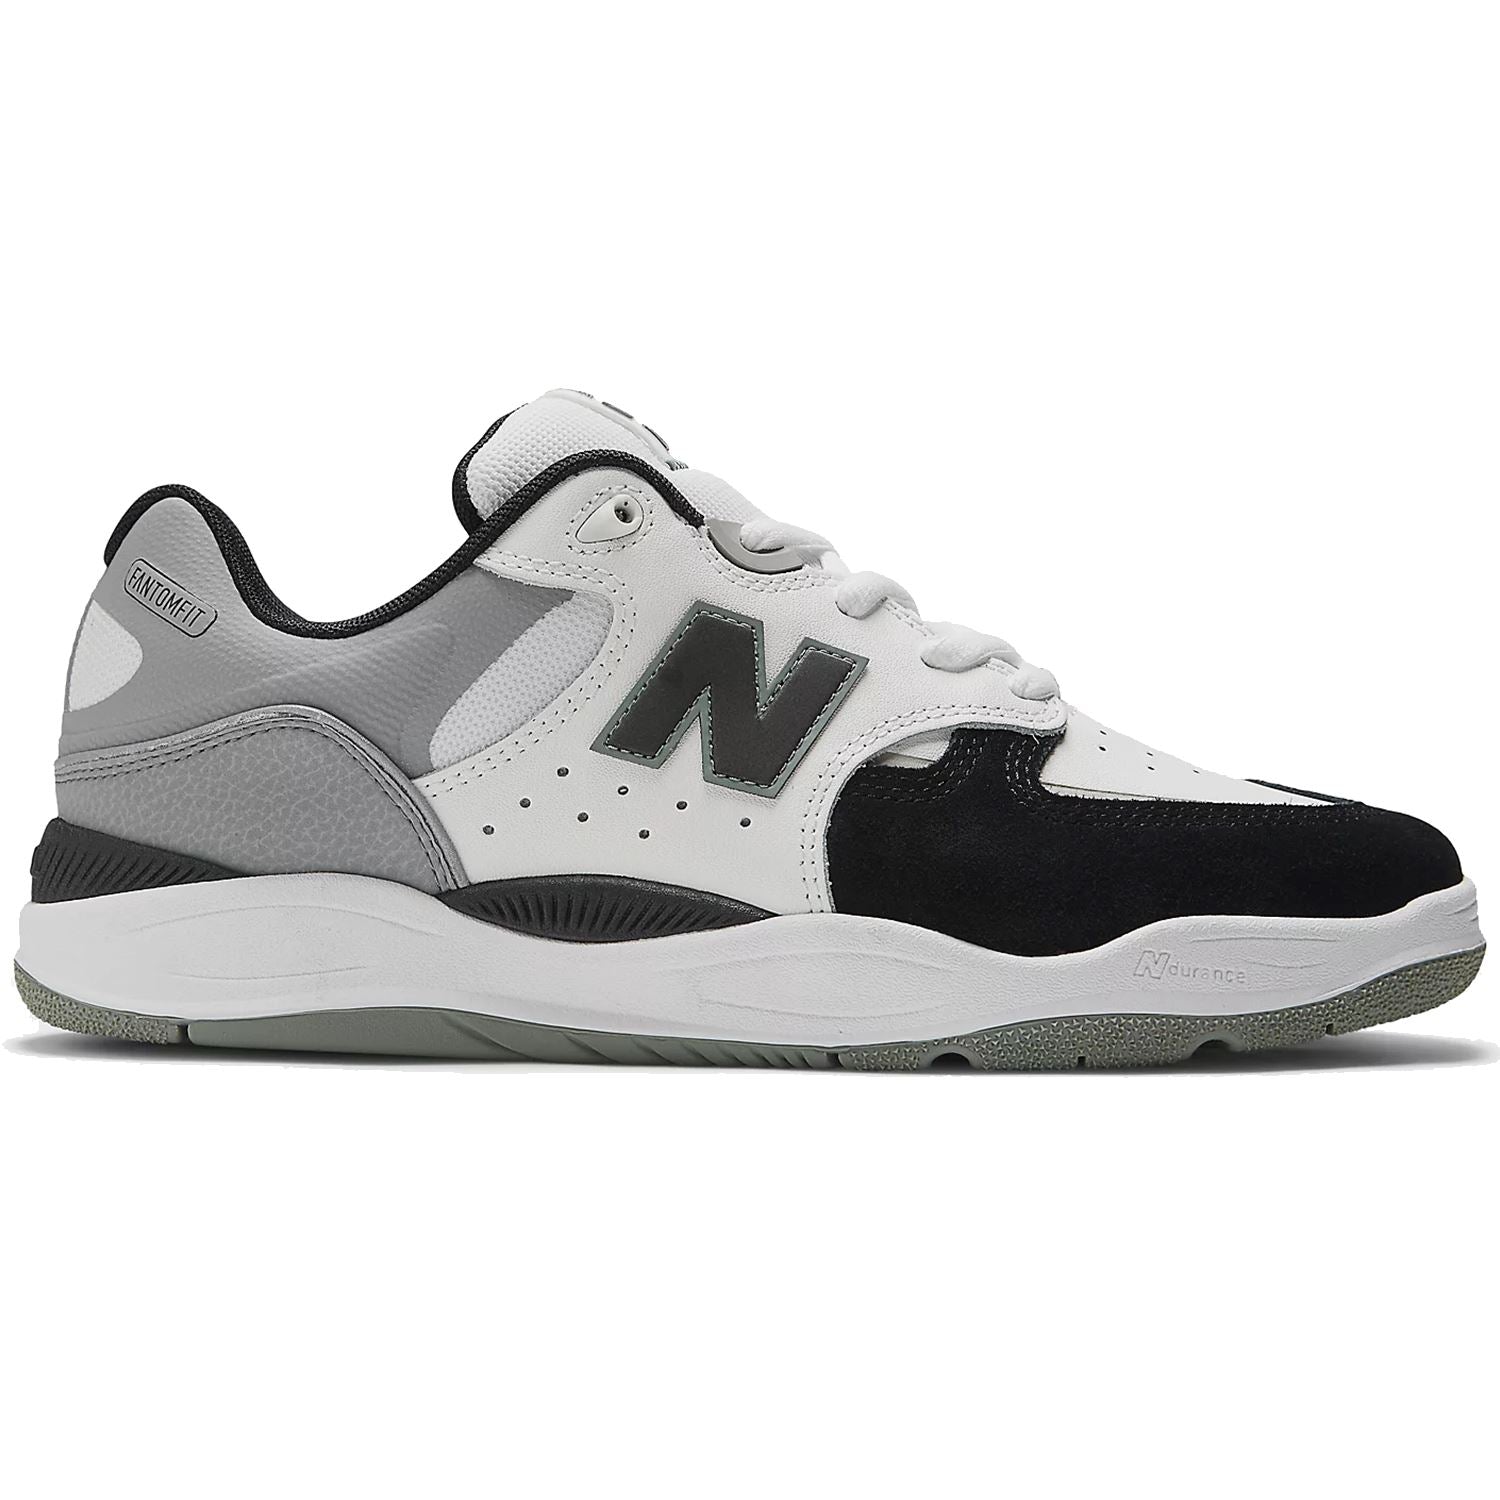 New Balance Numeric Tiago NM1010 White/Black/Sage footwear New Balance Numeric 